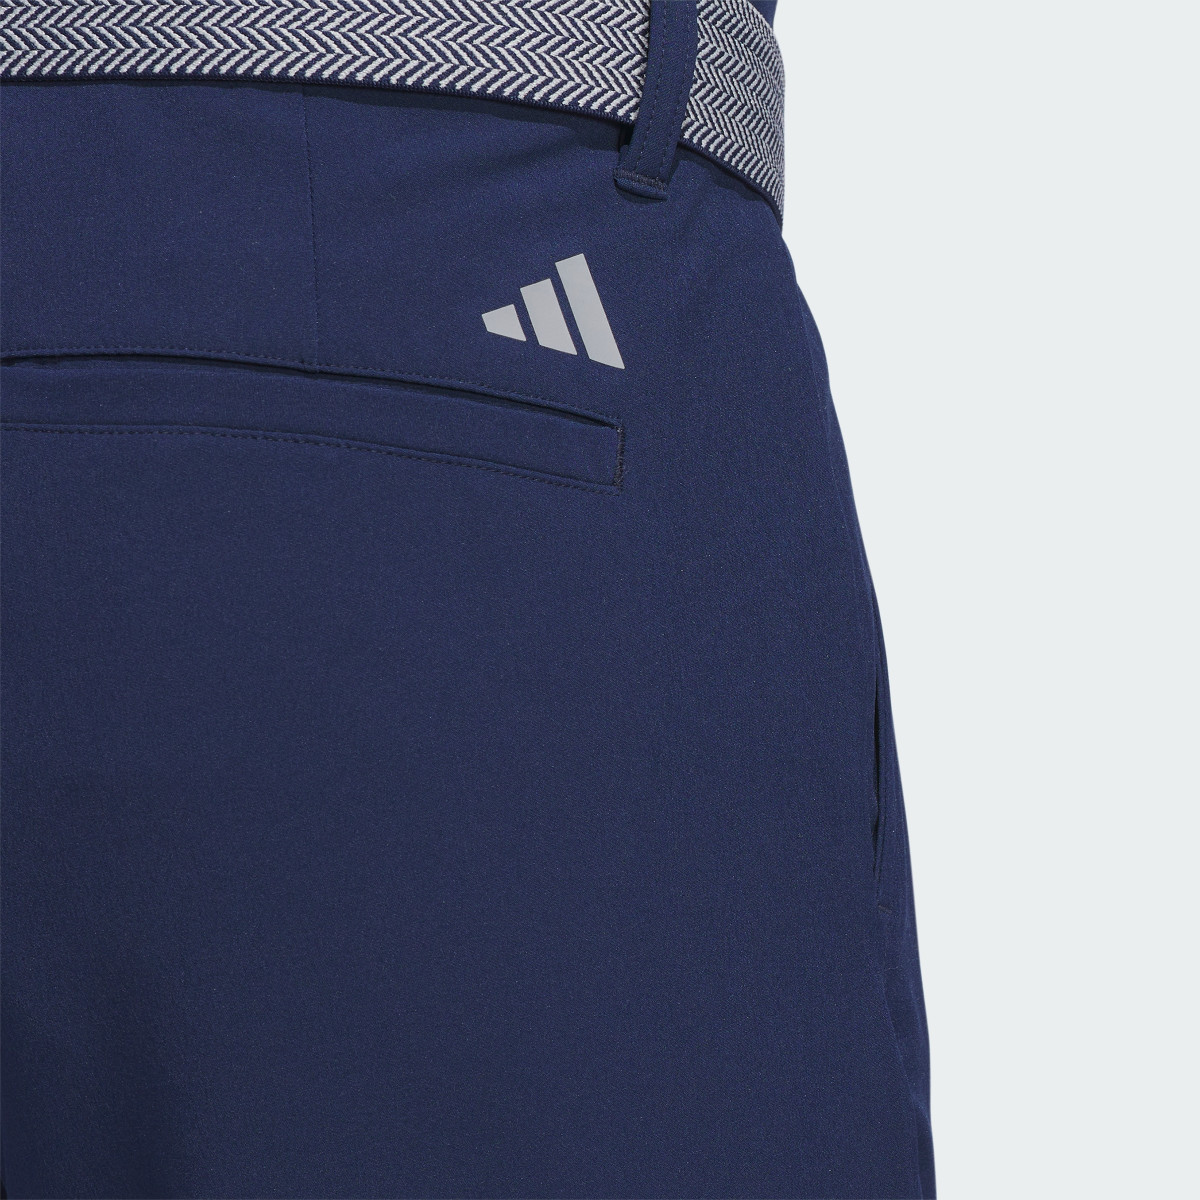 Adidas Pants de Golf Ultimate365 Pierna Cónica. 7